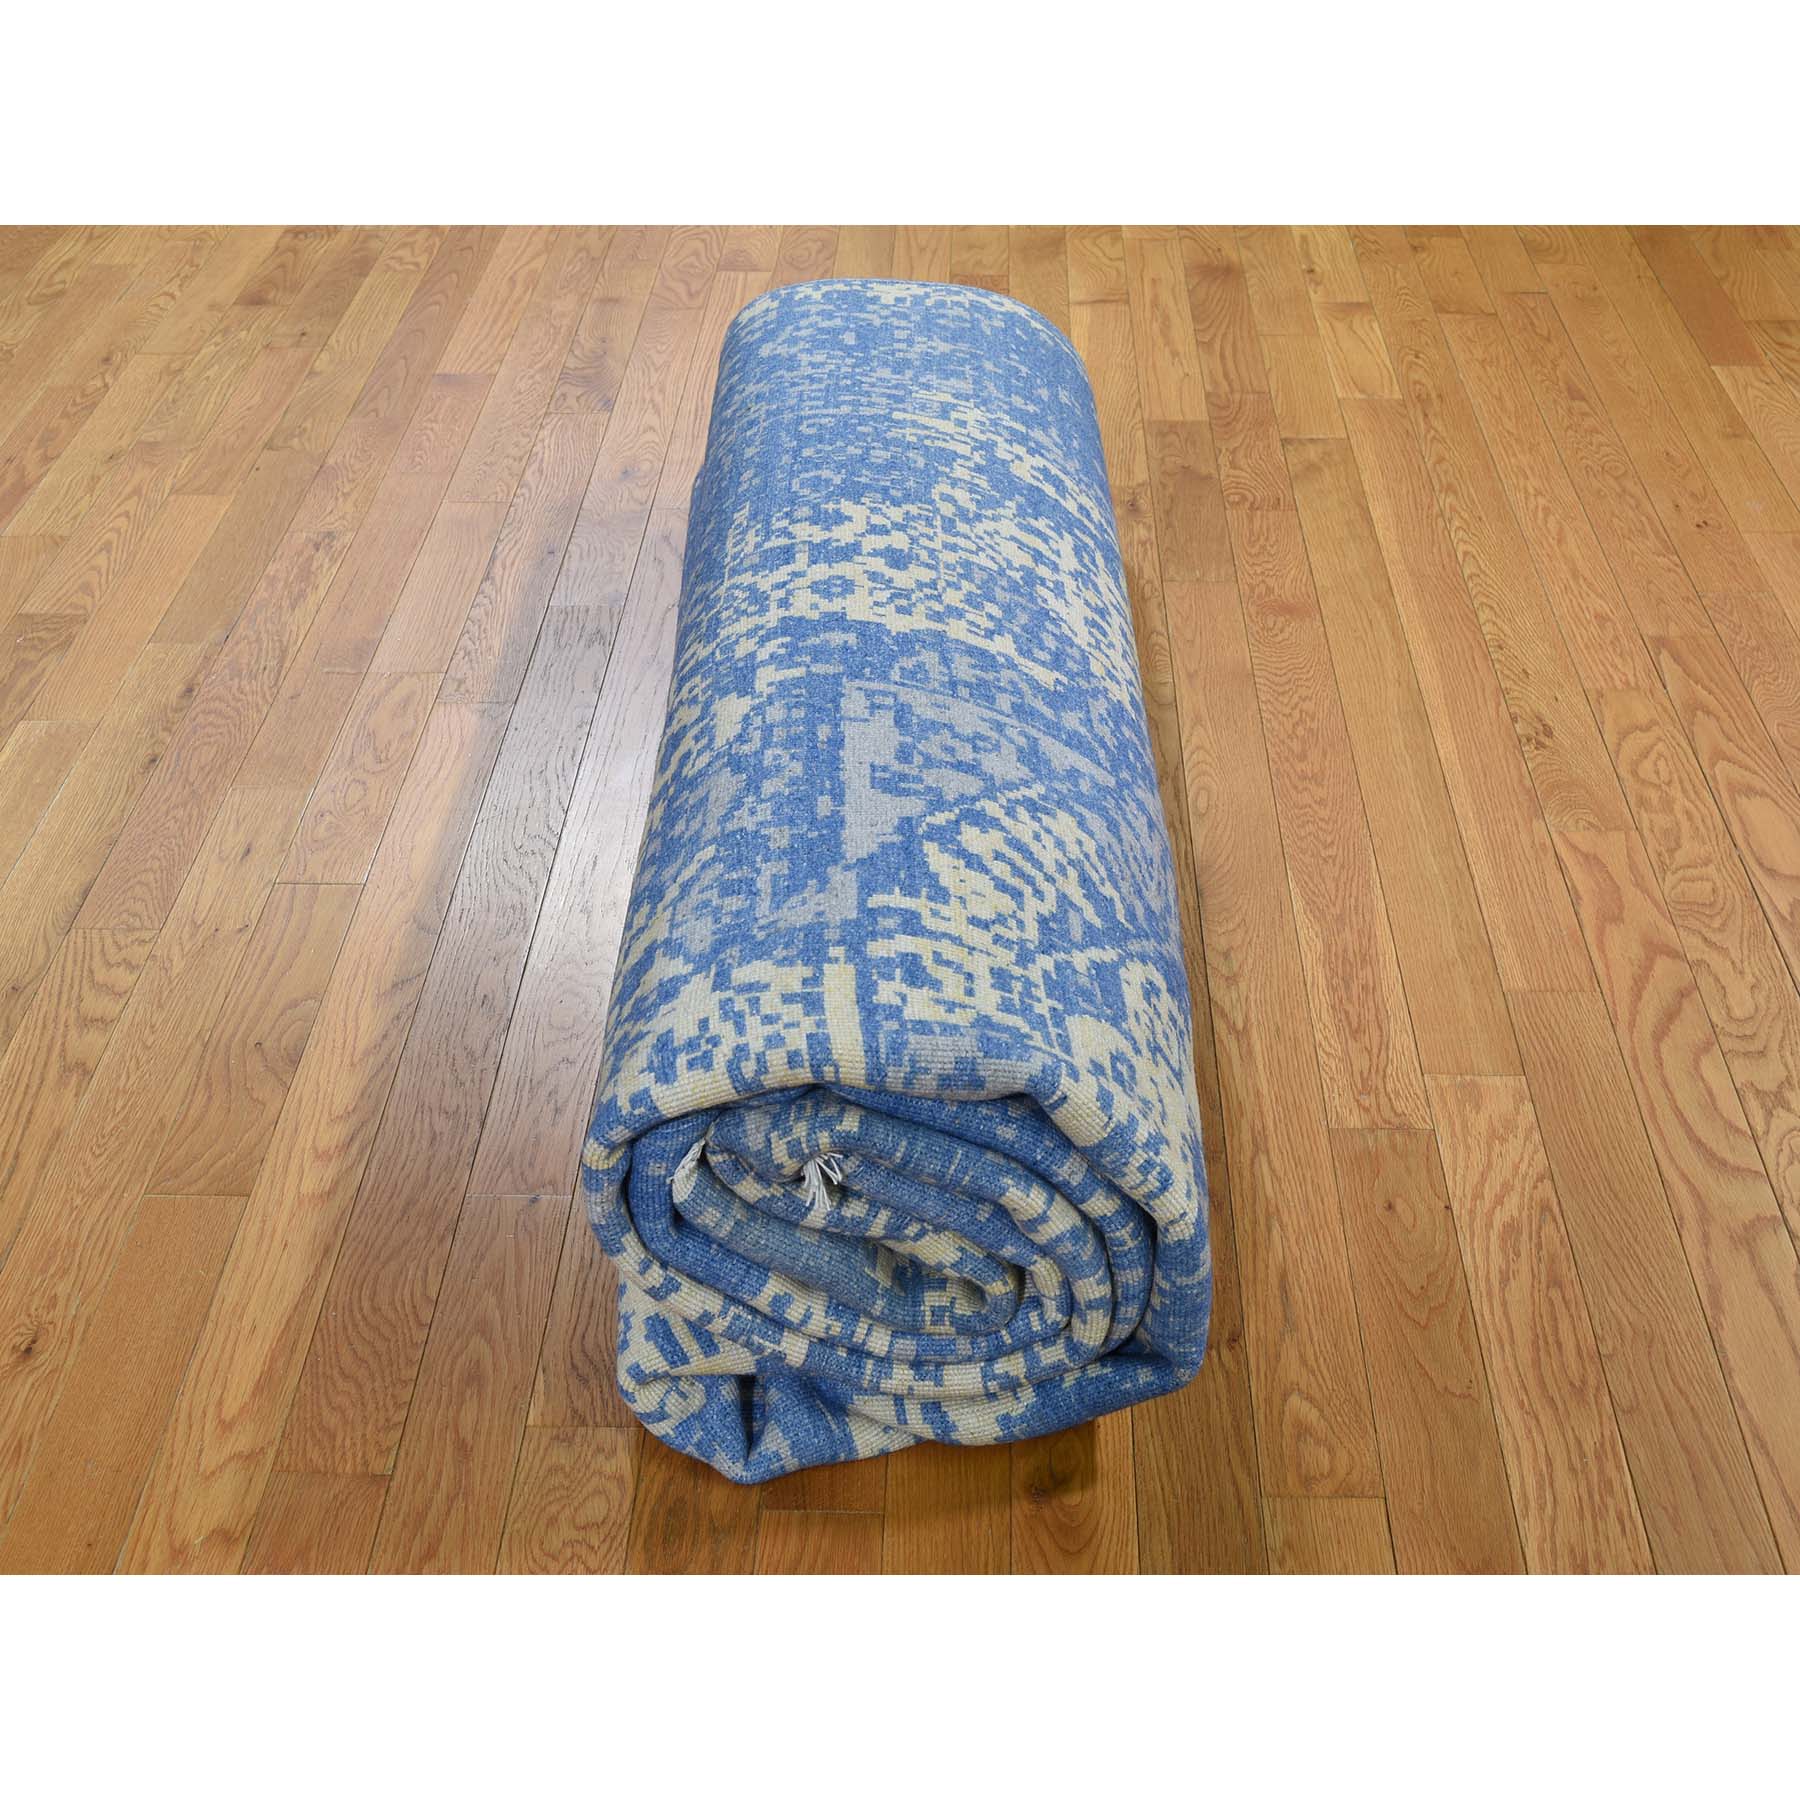 9-2 x12-5  Blue Wool And Silk Broken Mamluk Design Hand-Knotted Oriental Rug 